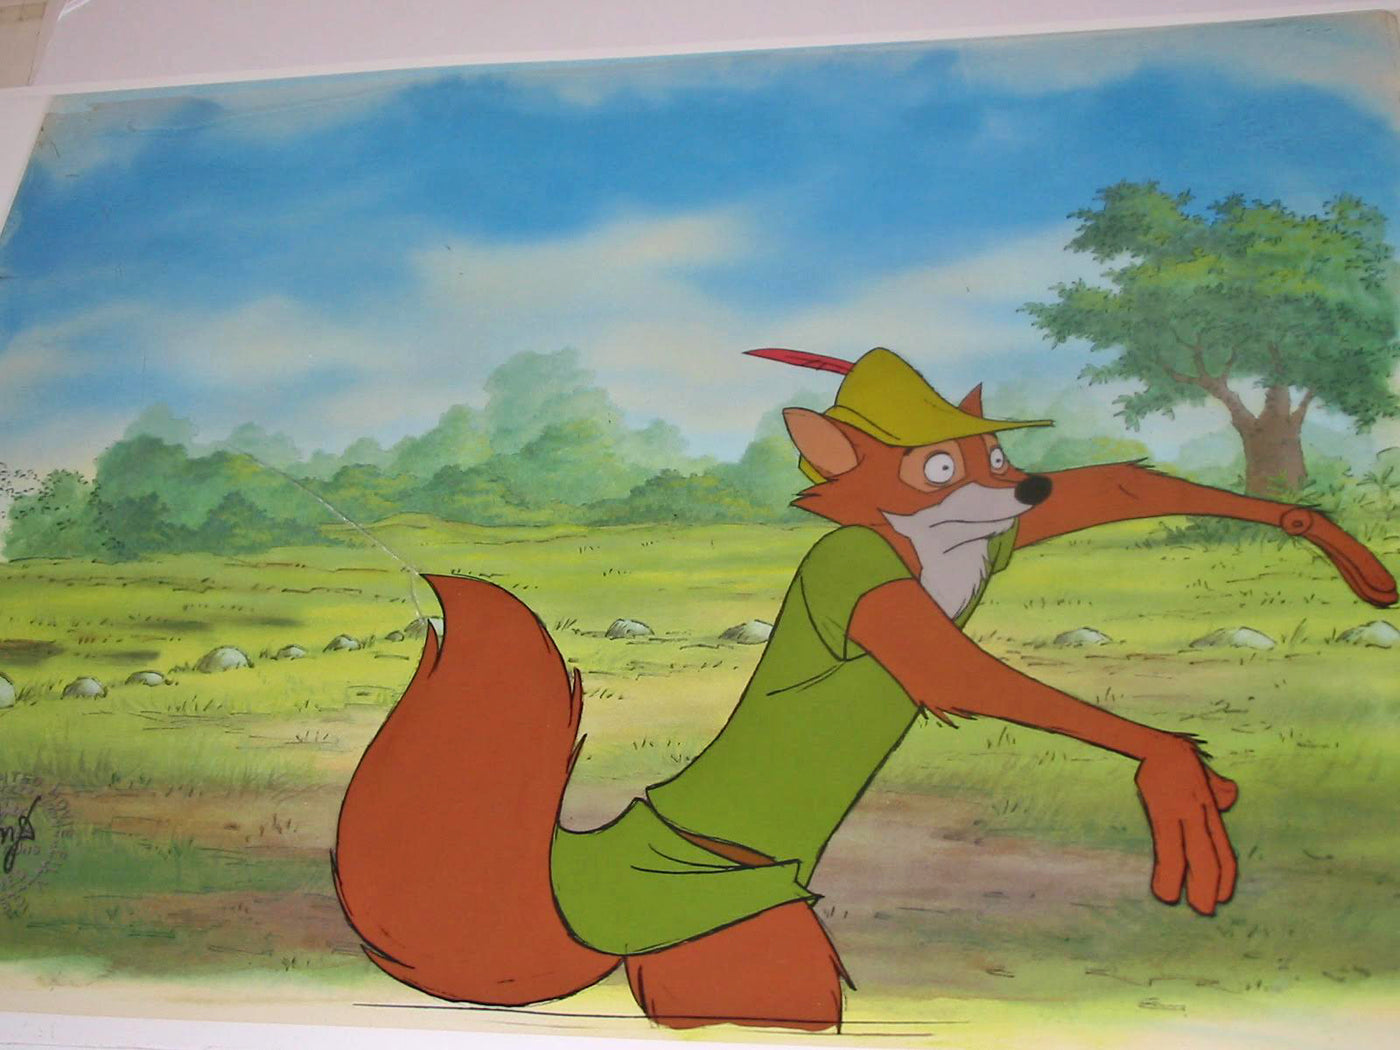 Original Disney Production Cel from Robin Hood